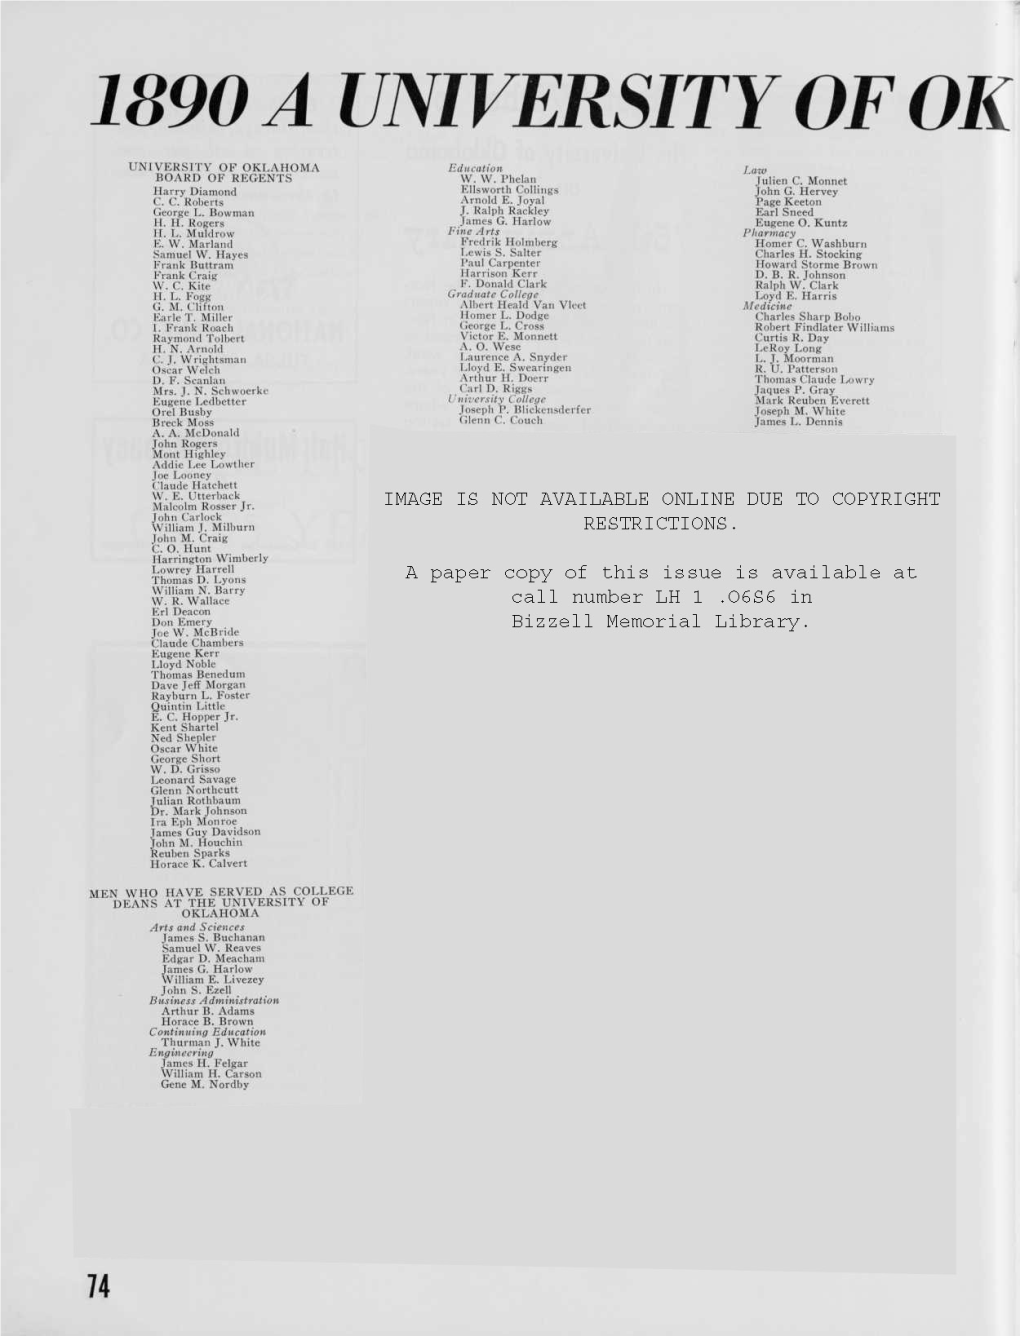 1890 a UNIVERSITY of OK UNIVERSITY of OKLAHOMA Education Law BOARD of REGENTS W